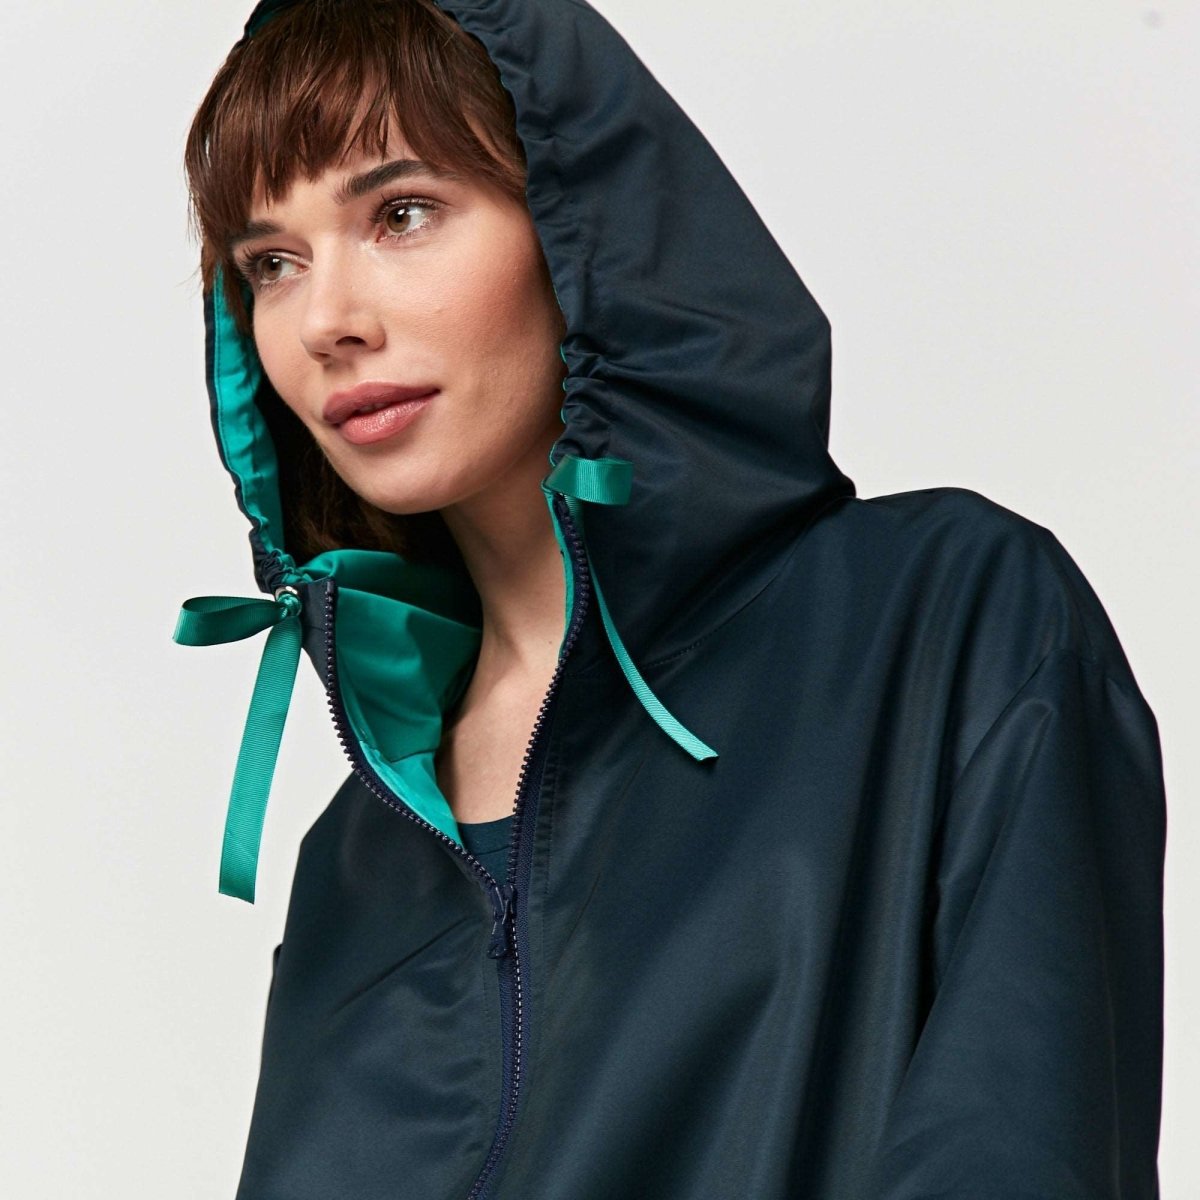 Waterproof Coat SECRET GARDEN | Raincoat | Mac | multi colour raincoat & Gratis Bag! - colorat.eu